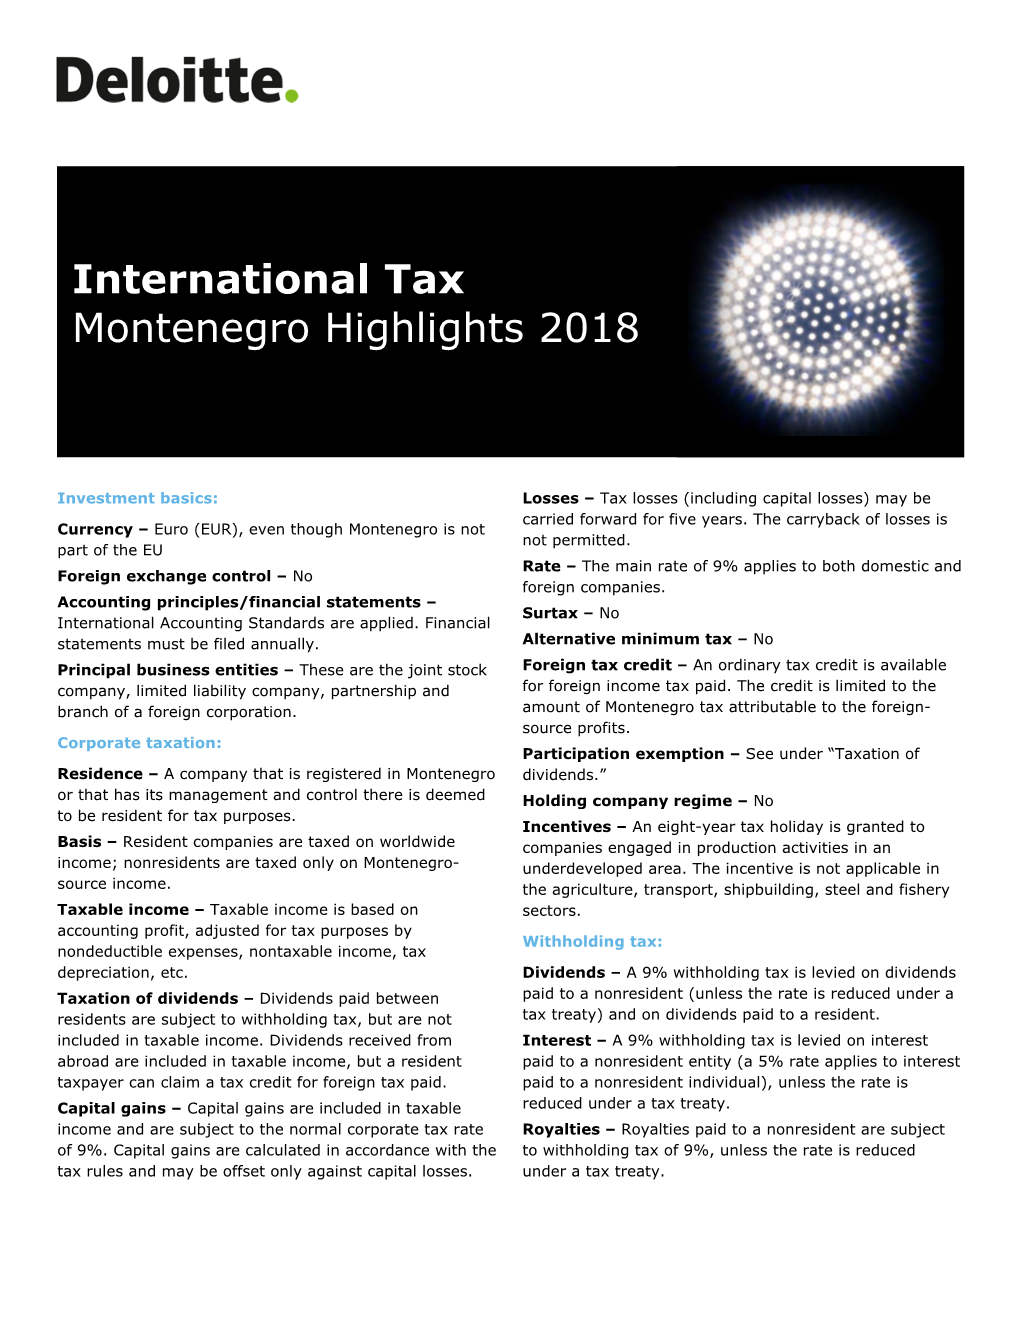 International Tax Montenegro Highlights 2018